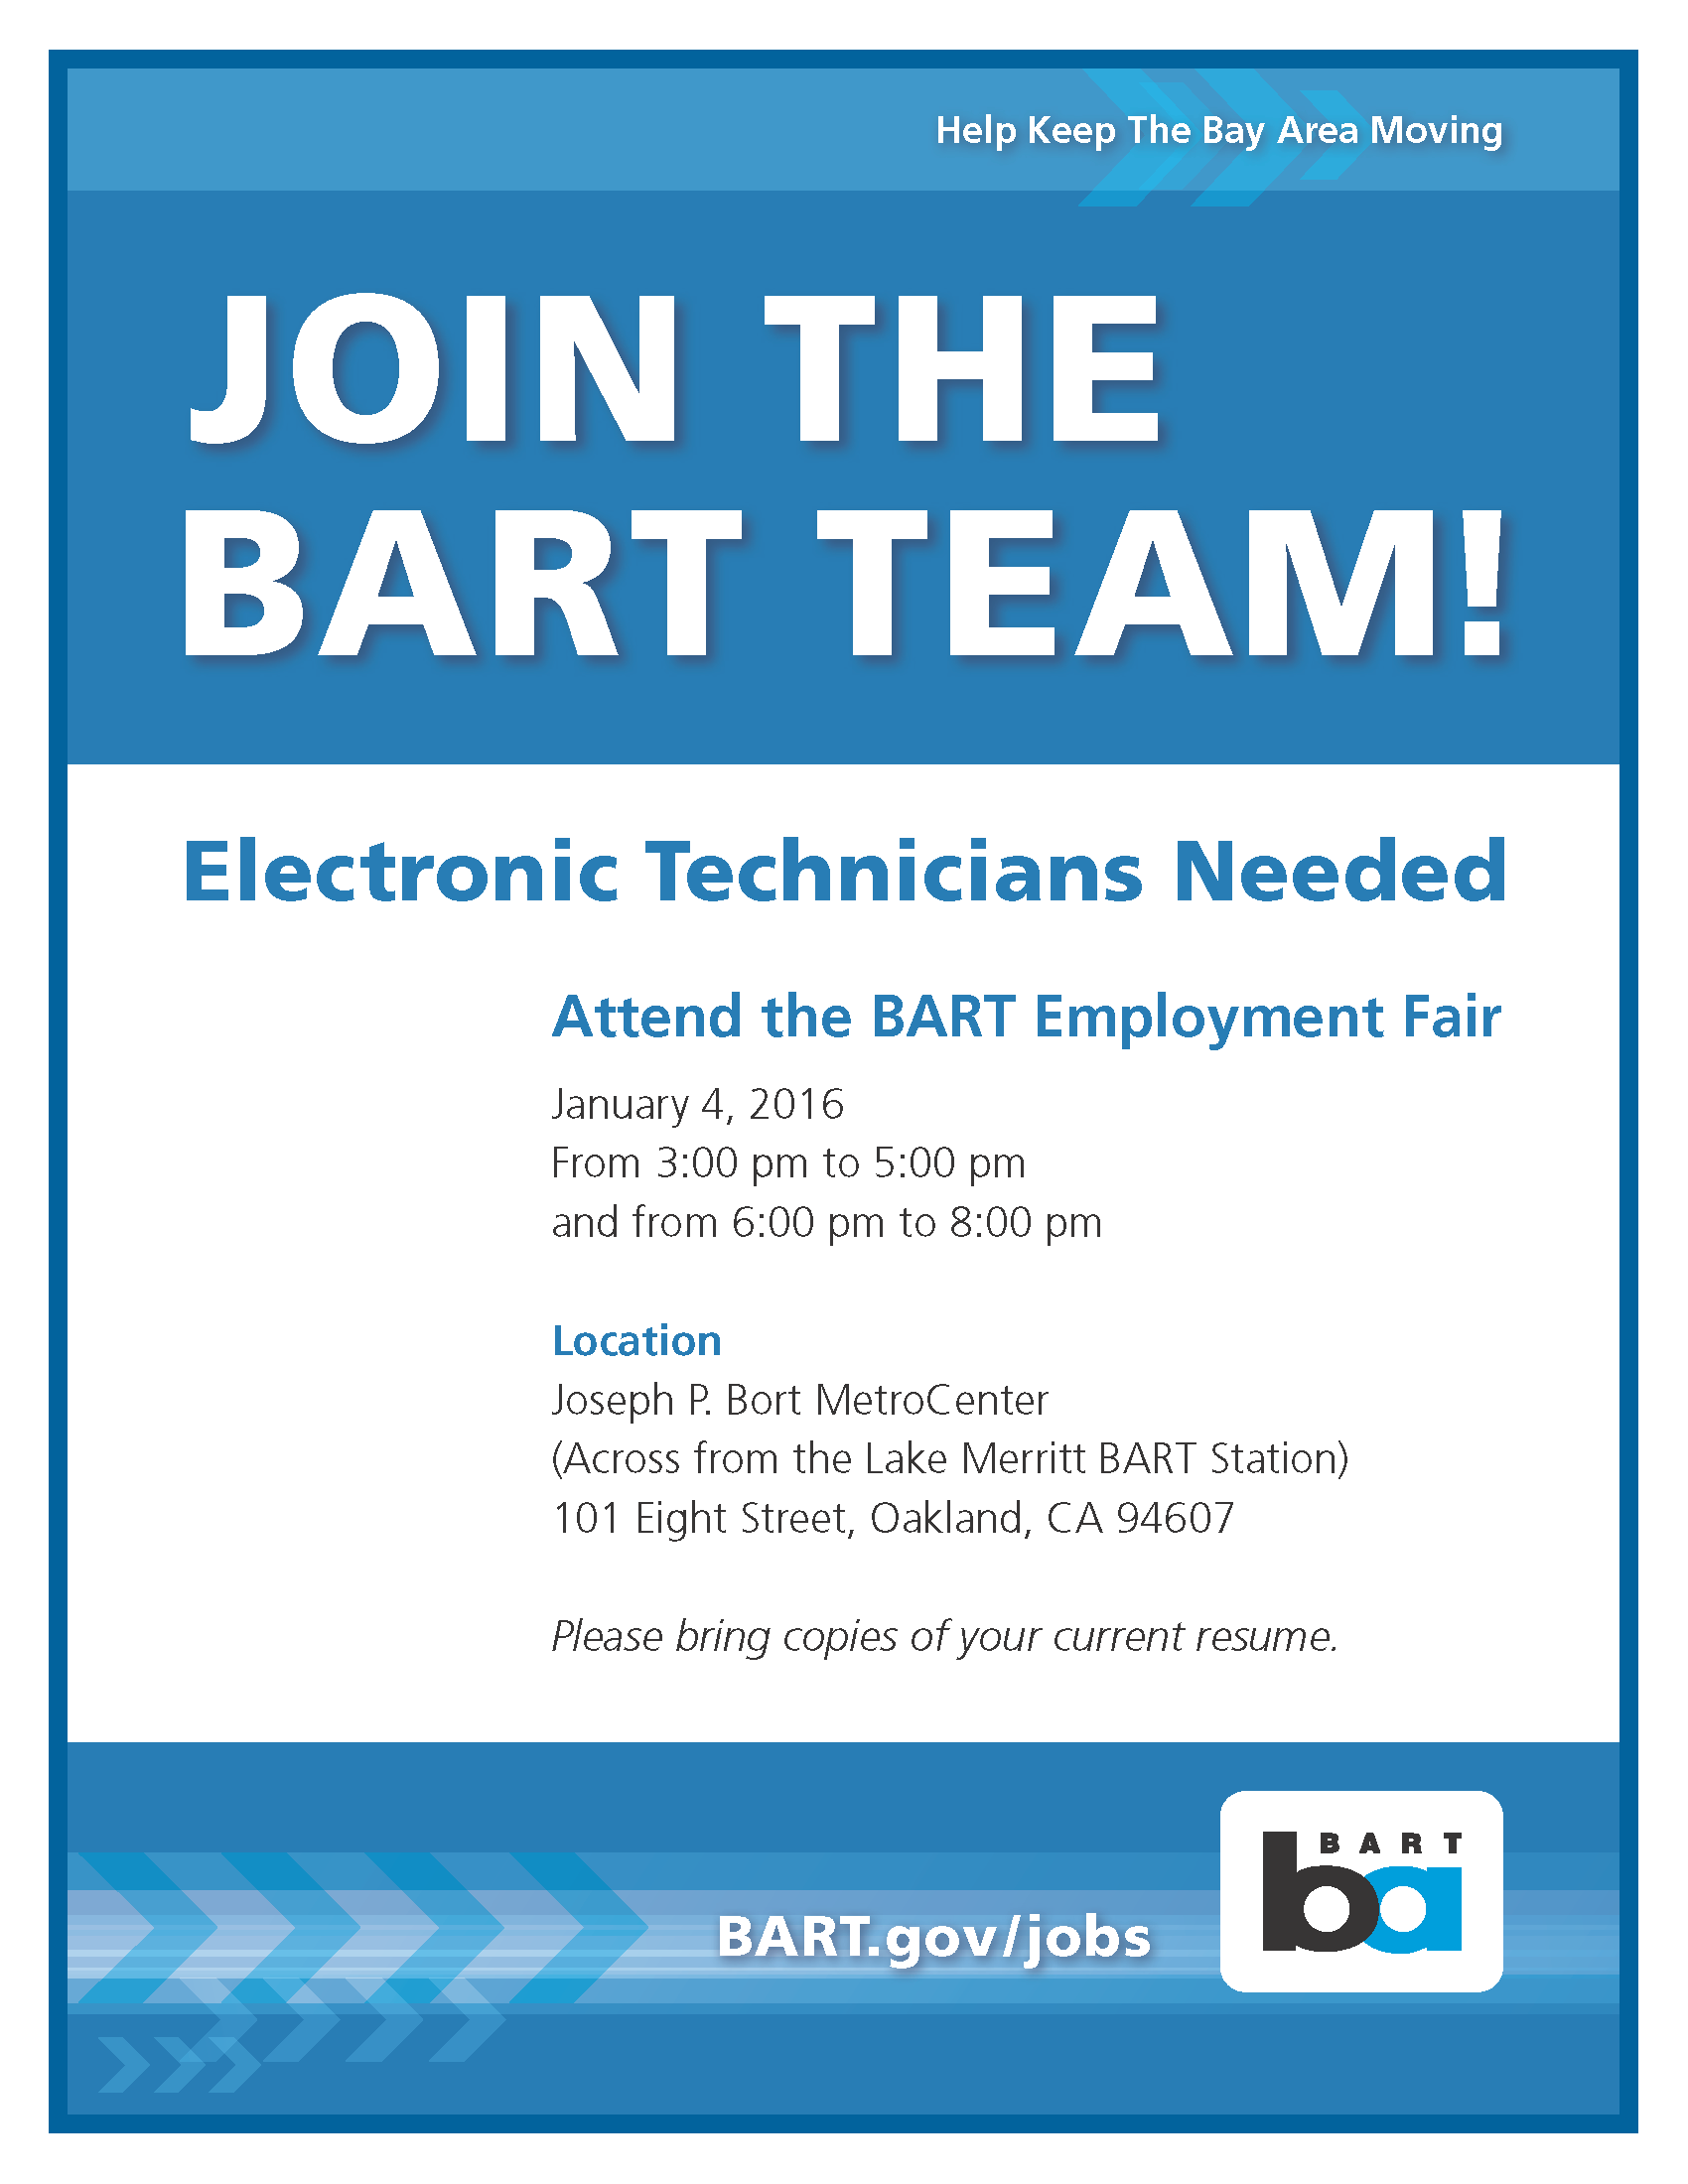 Join the BART Team HR Flyer